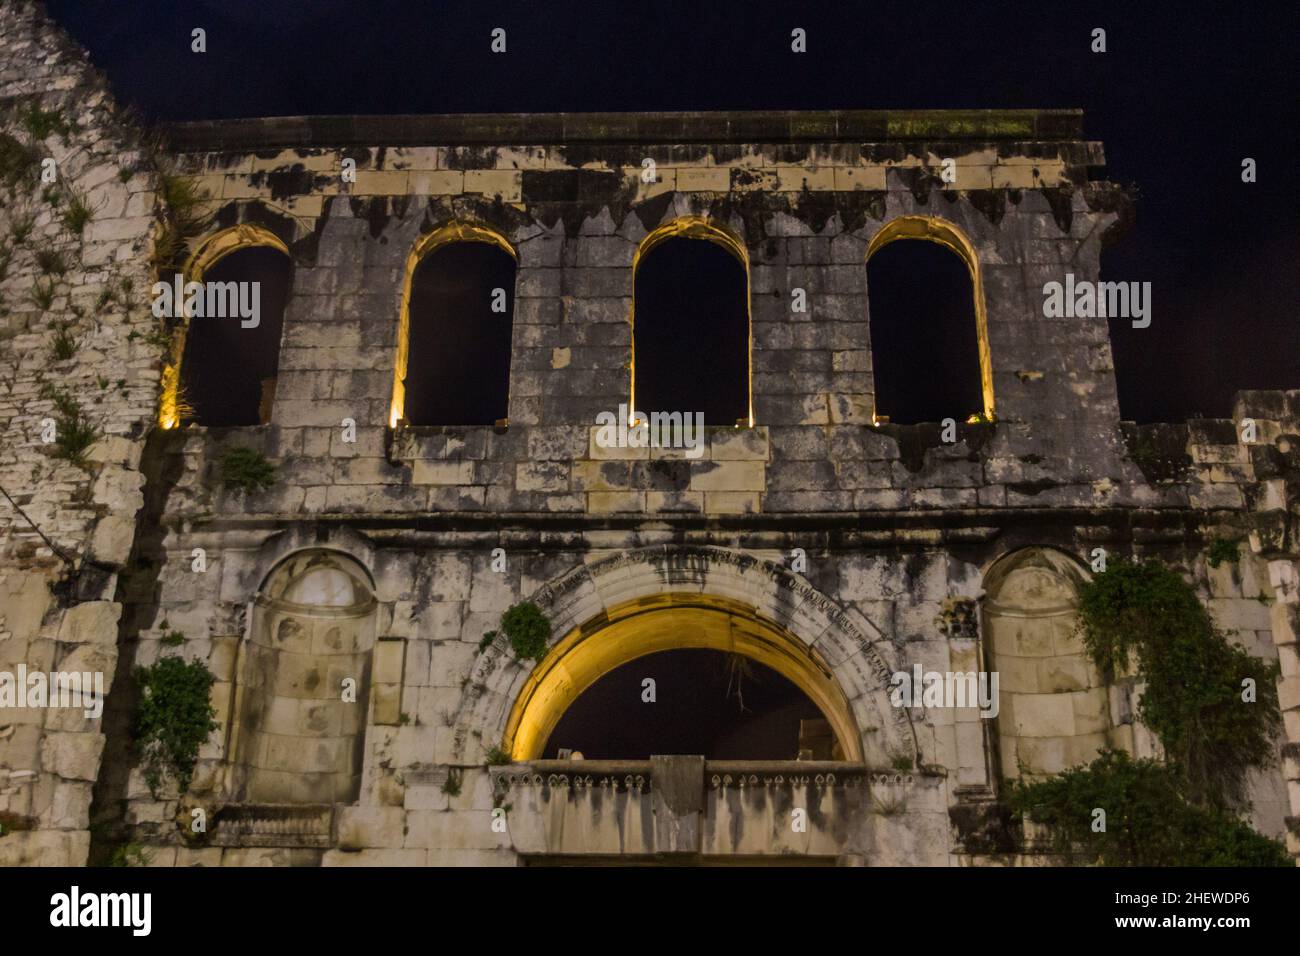 Night view of ancient ruins in Split, Croatia Stock Photo